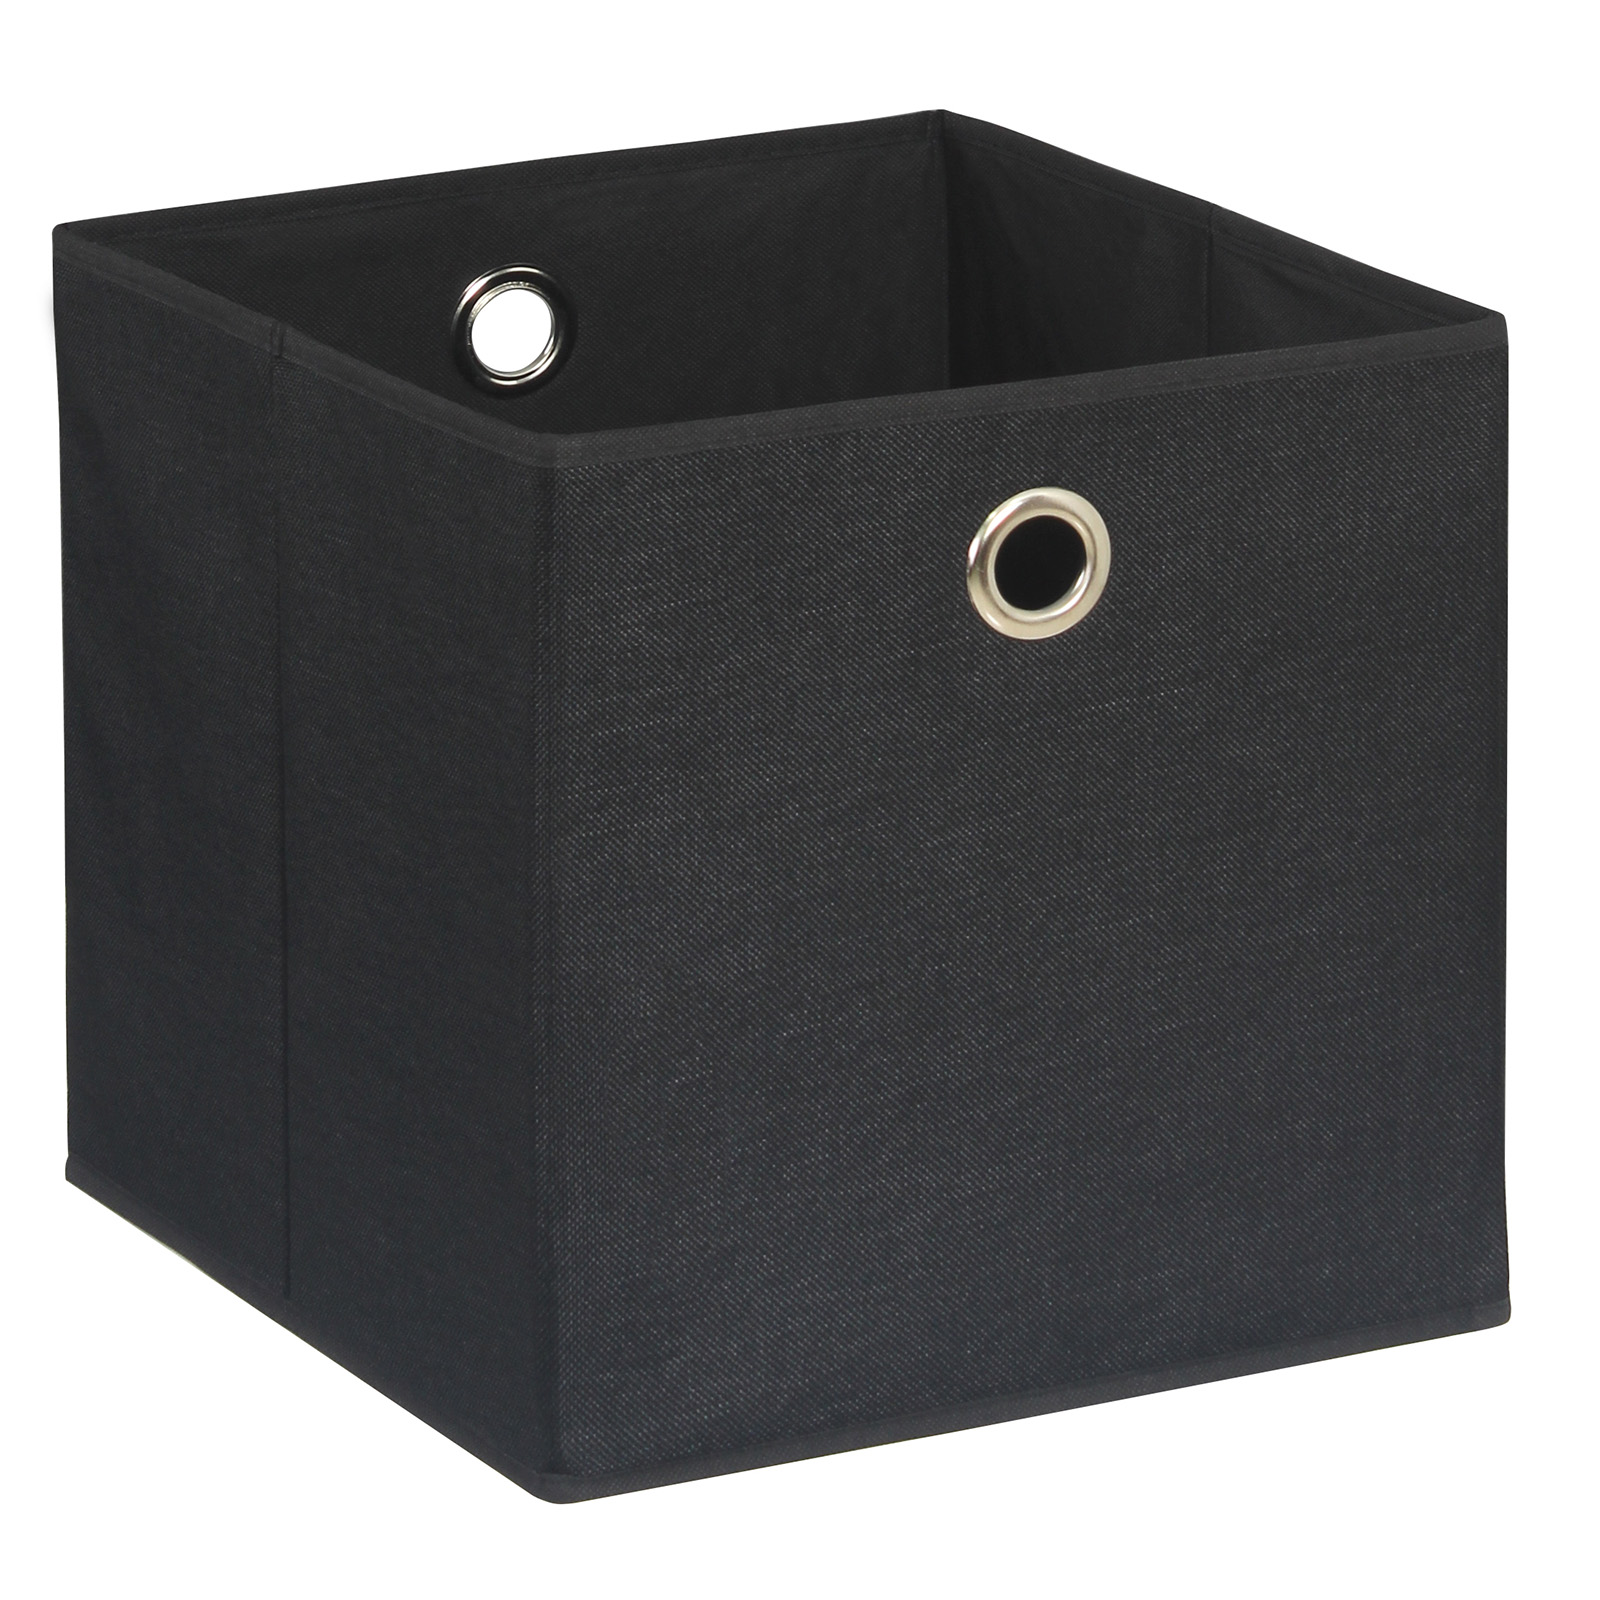 Clever Cube Premium Fabric Insert Ember Black